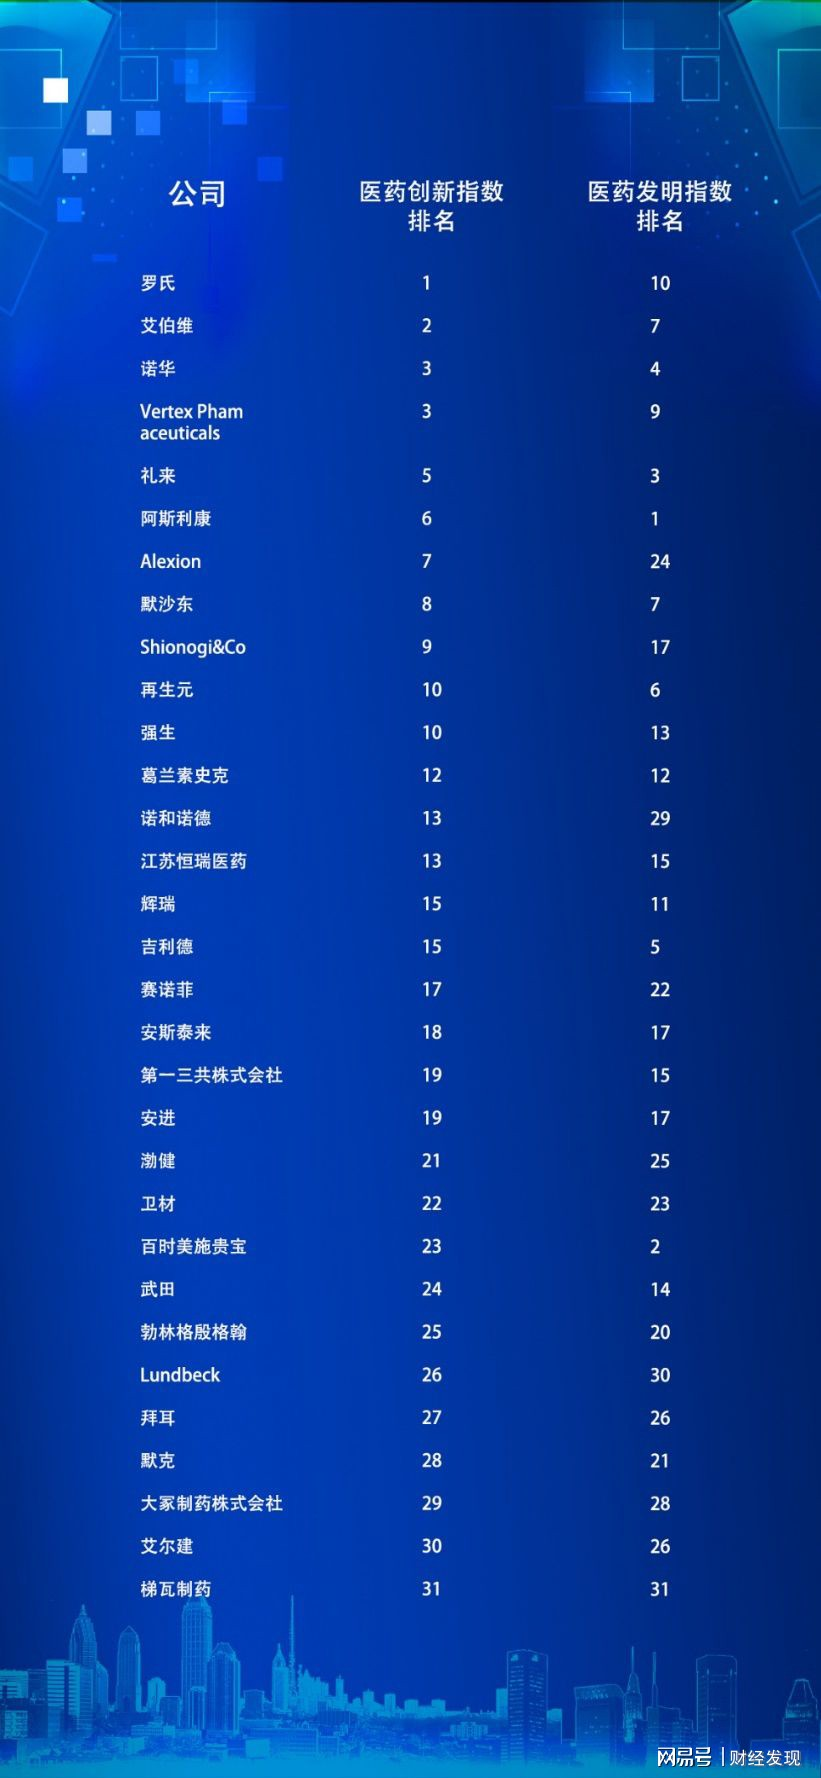 2020医药创新指数排行榜，恒瑞成为中国唯一上榜企业，全球第<font color="red">13</font>